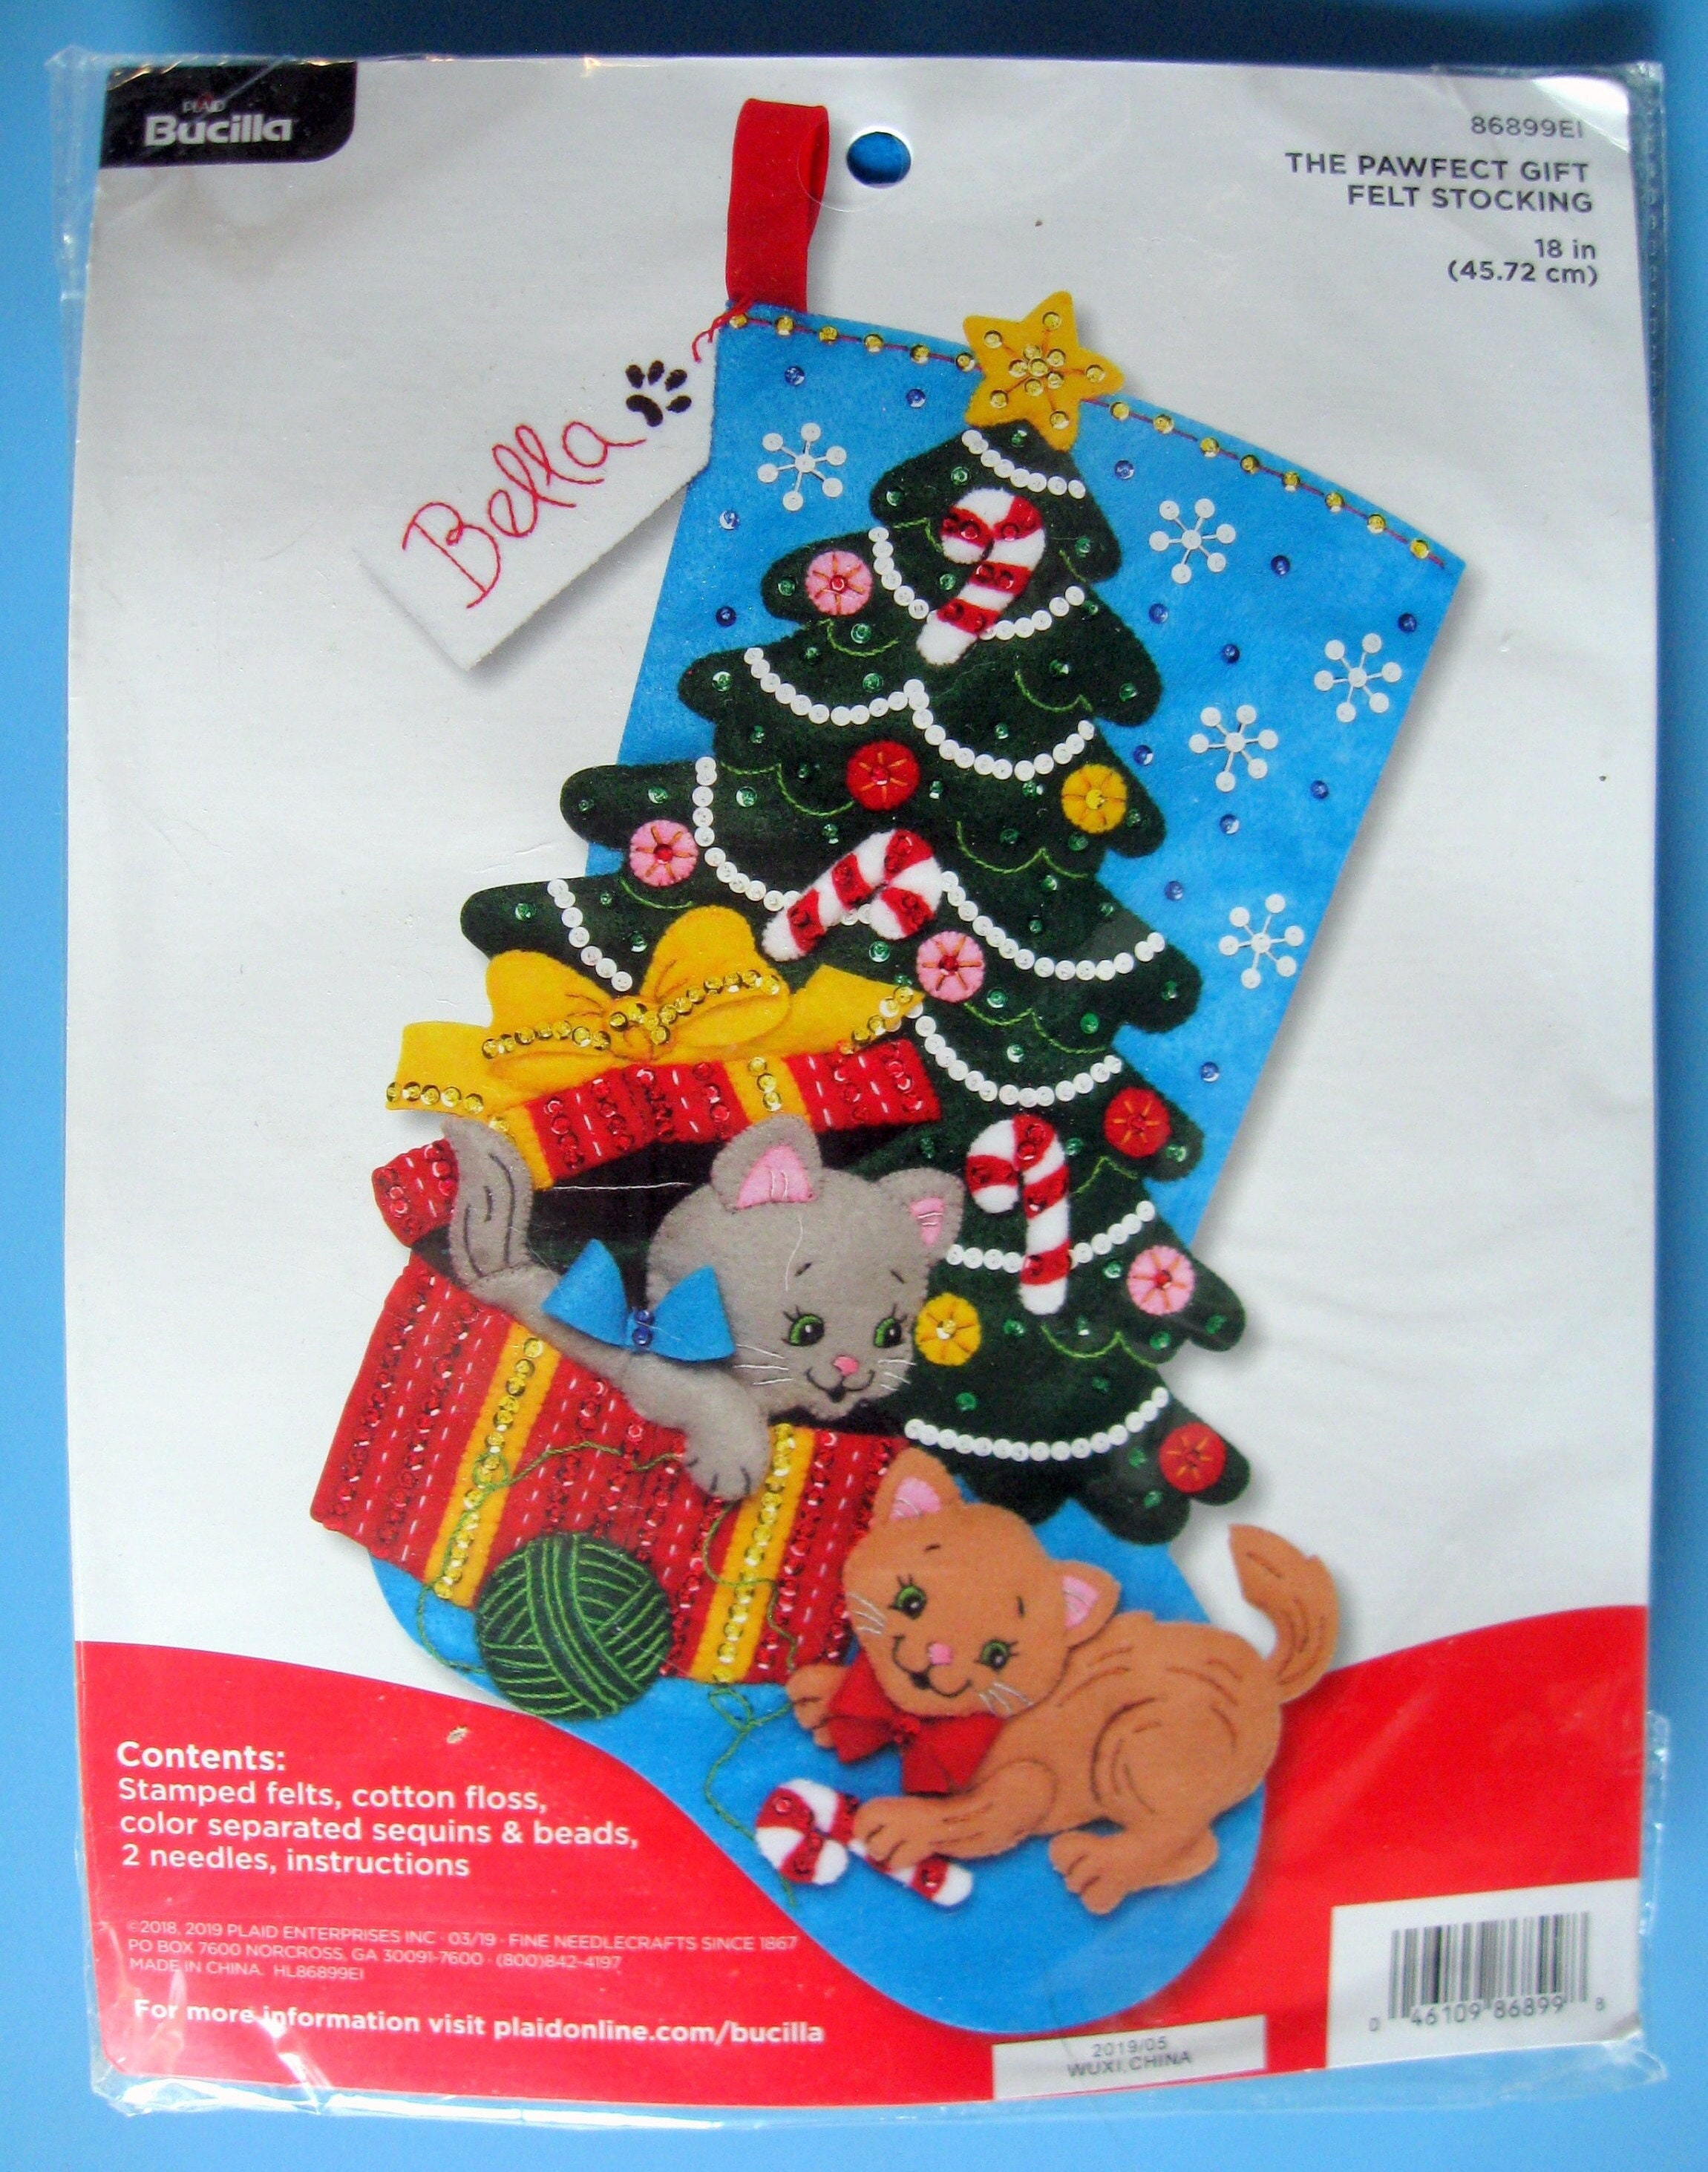 Pop-Up Santa Felt Stocking Kit by Bucilla Plaid